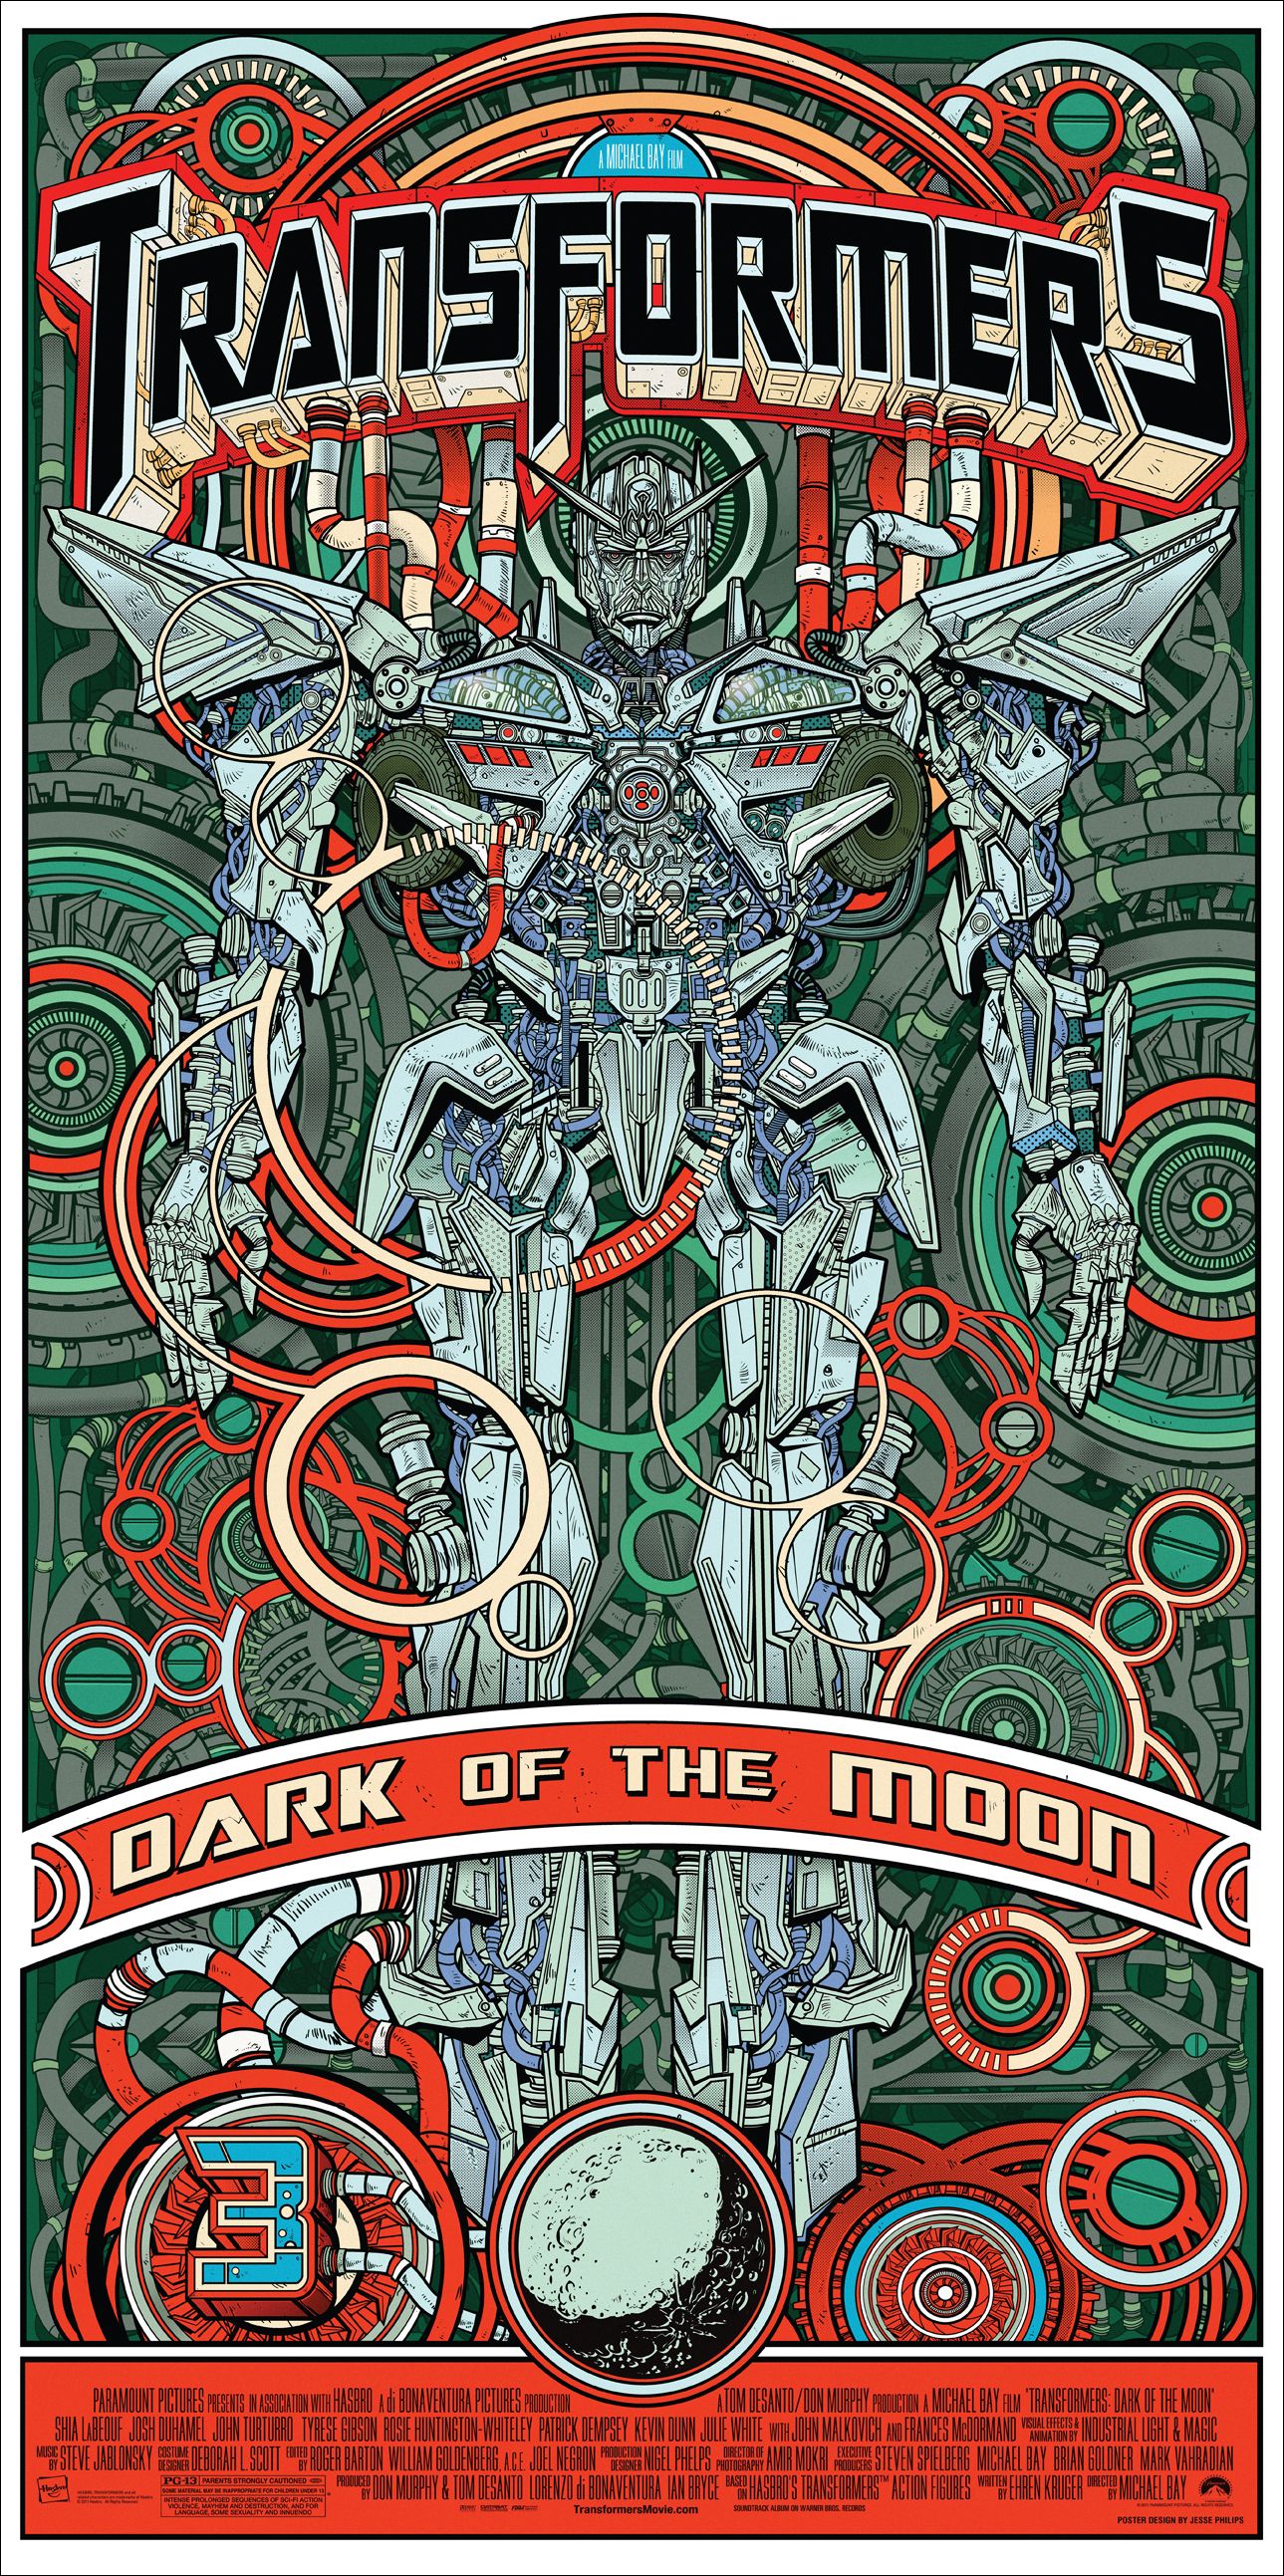 Transformers Dark of the Moon Alamo Drafhouse Poster #1